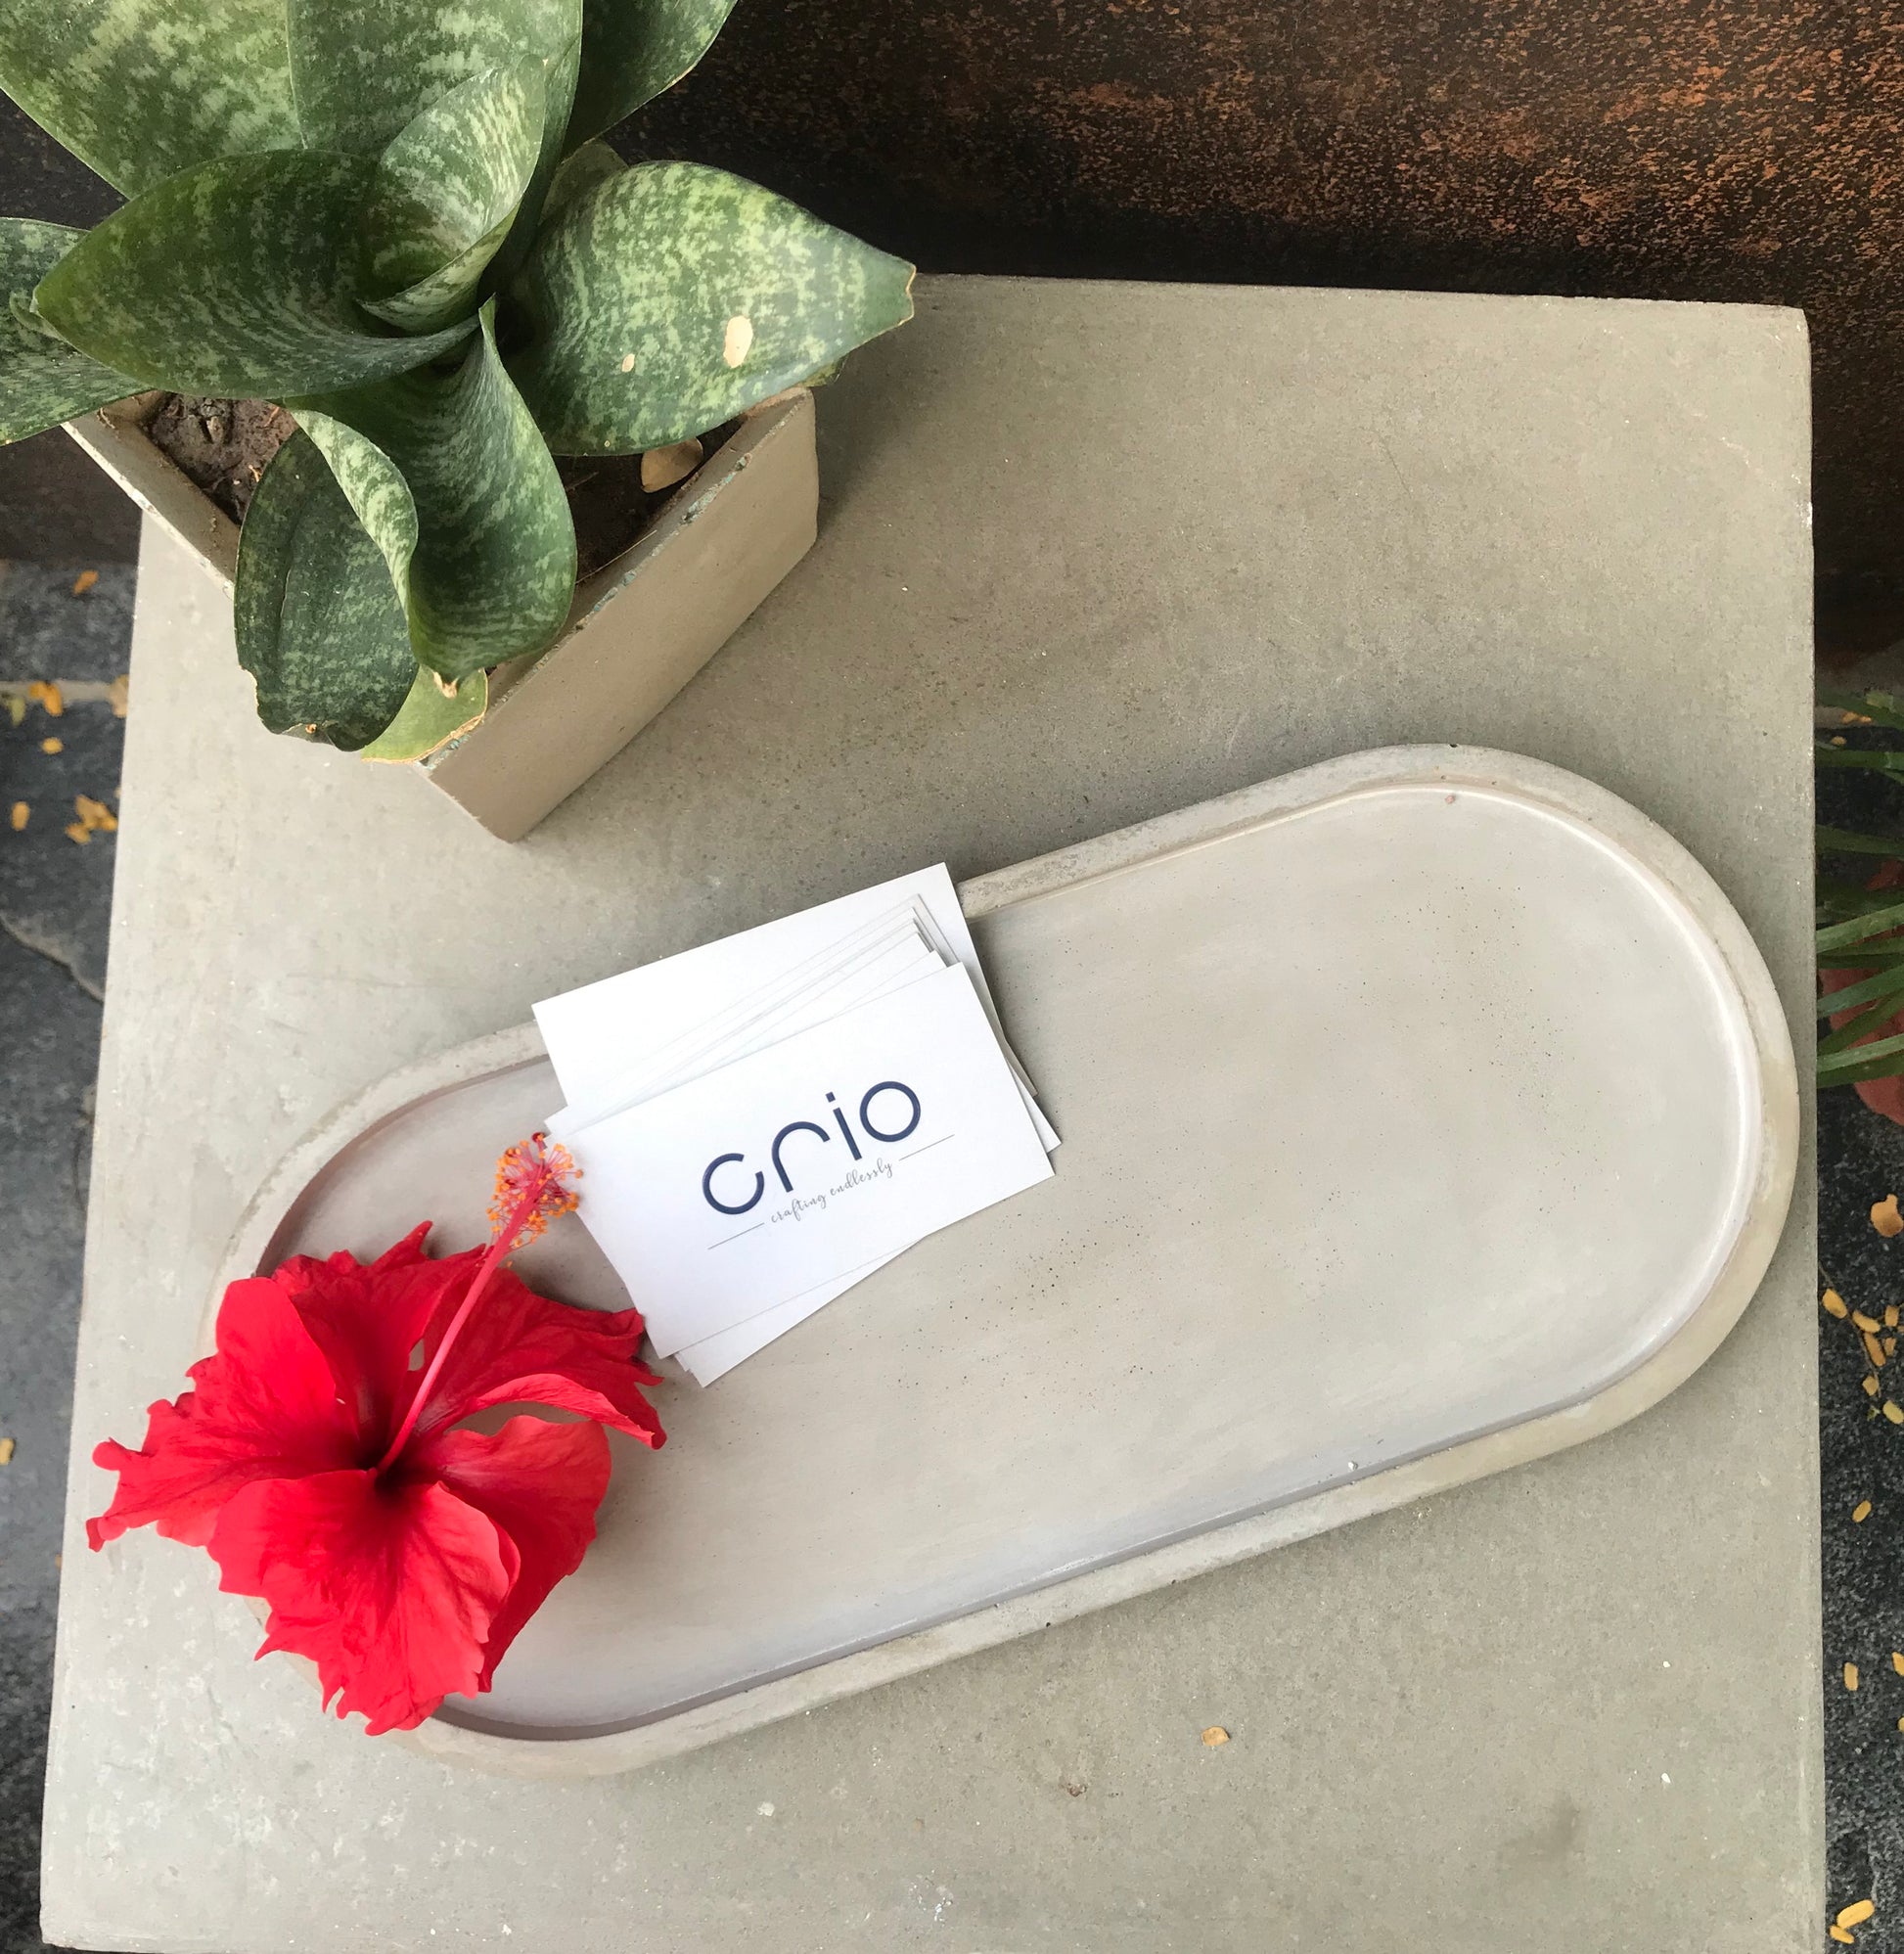 Concrete Tray/Display tray/fruits/desk accessories - Crio